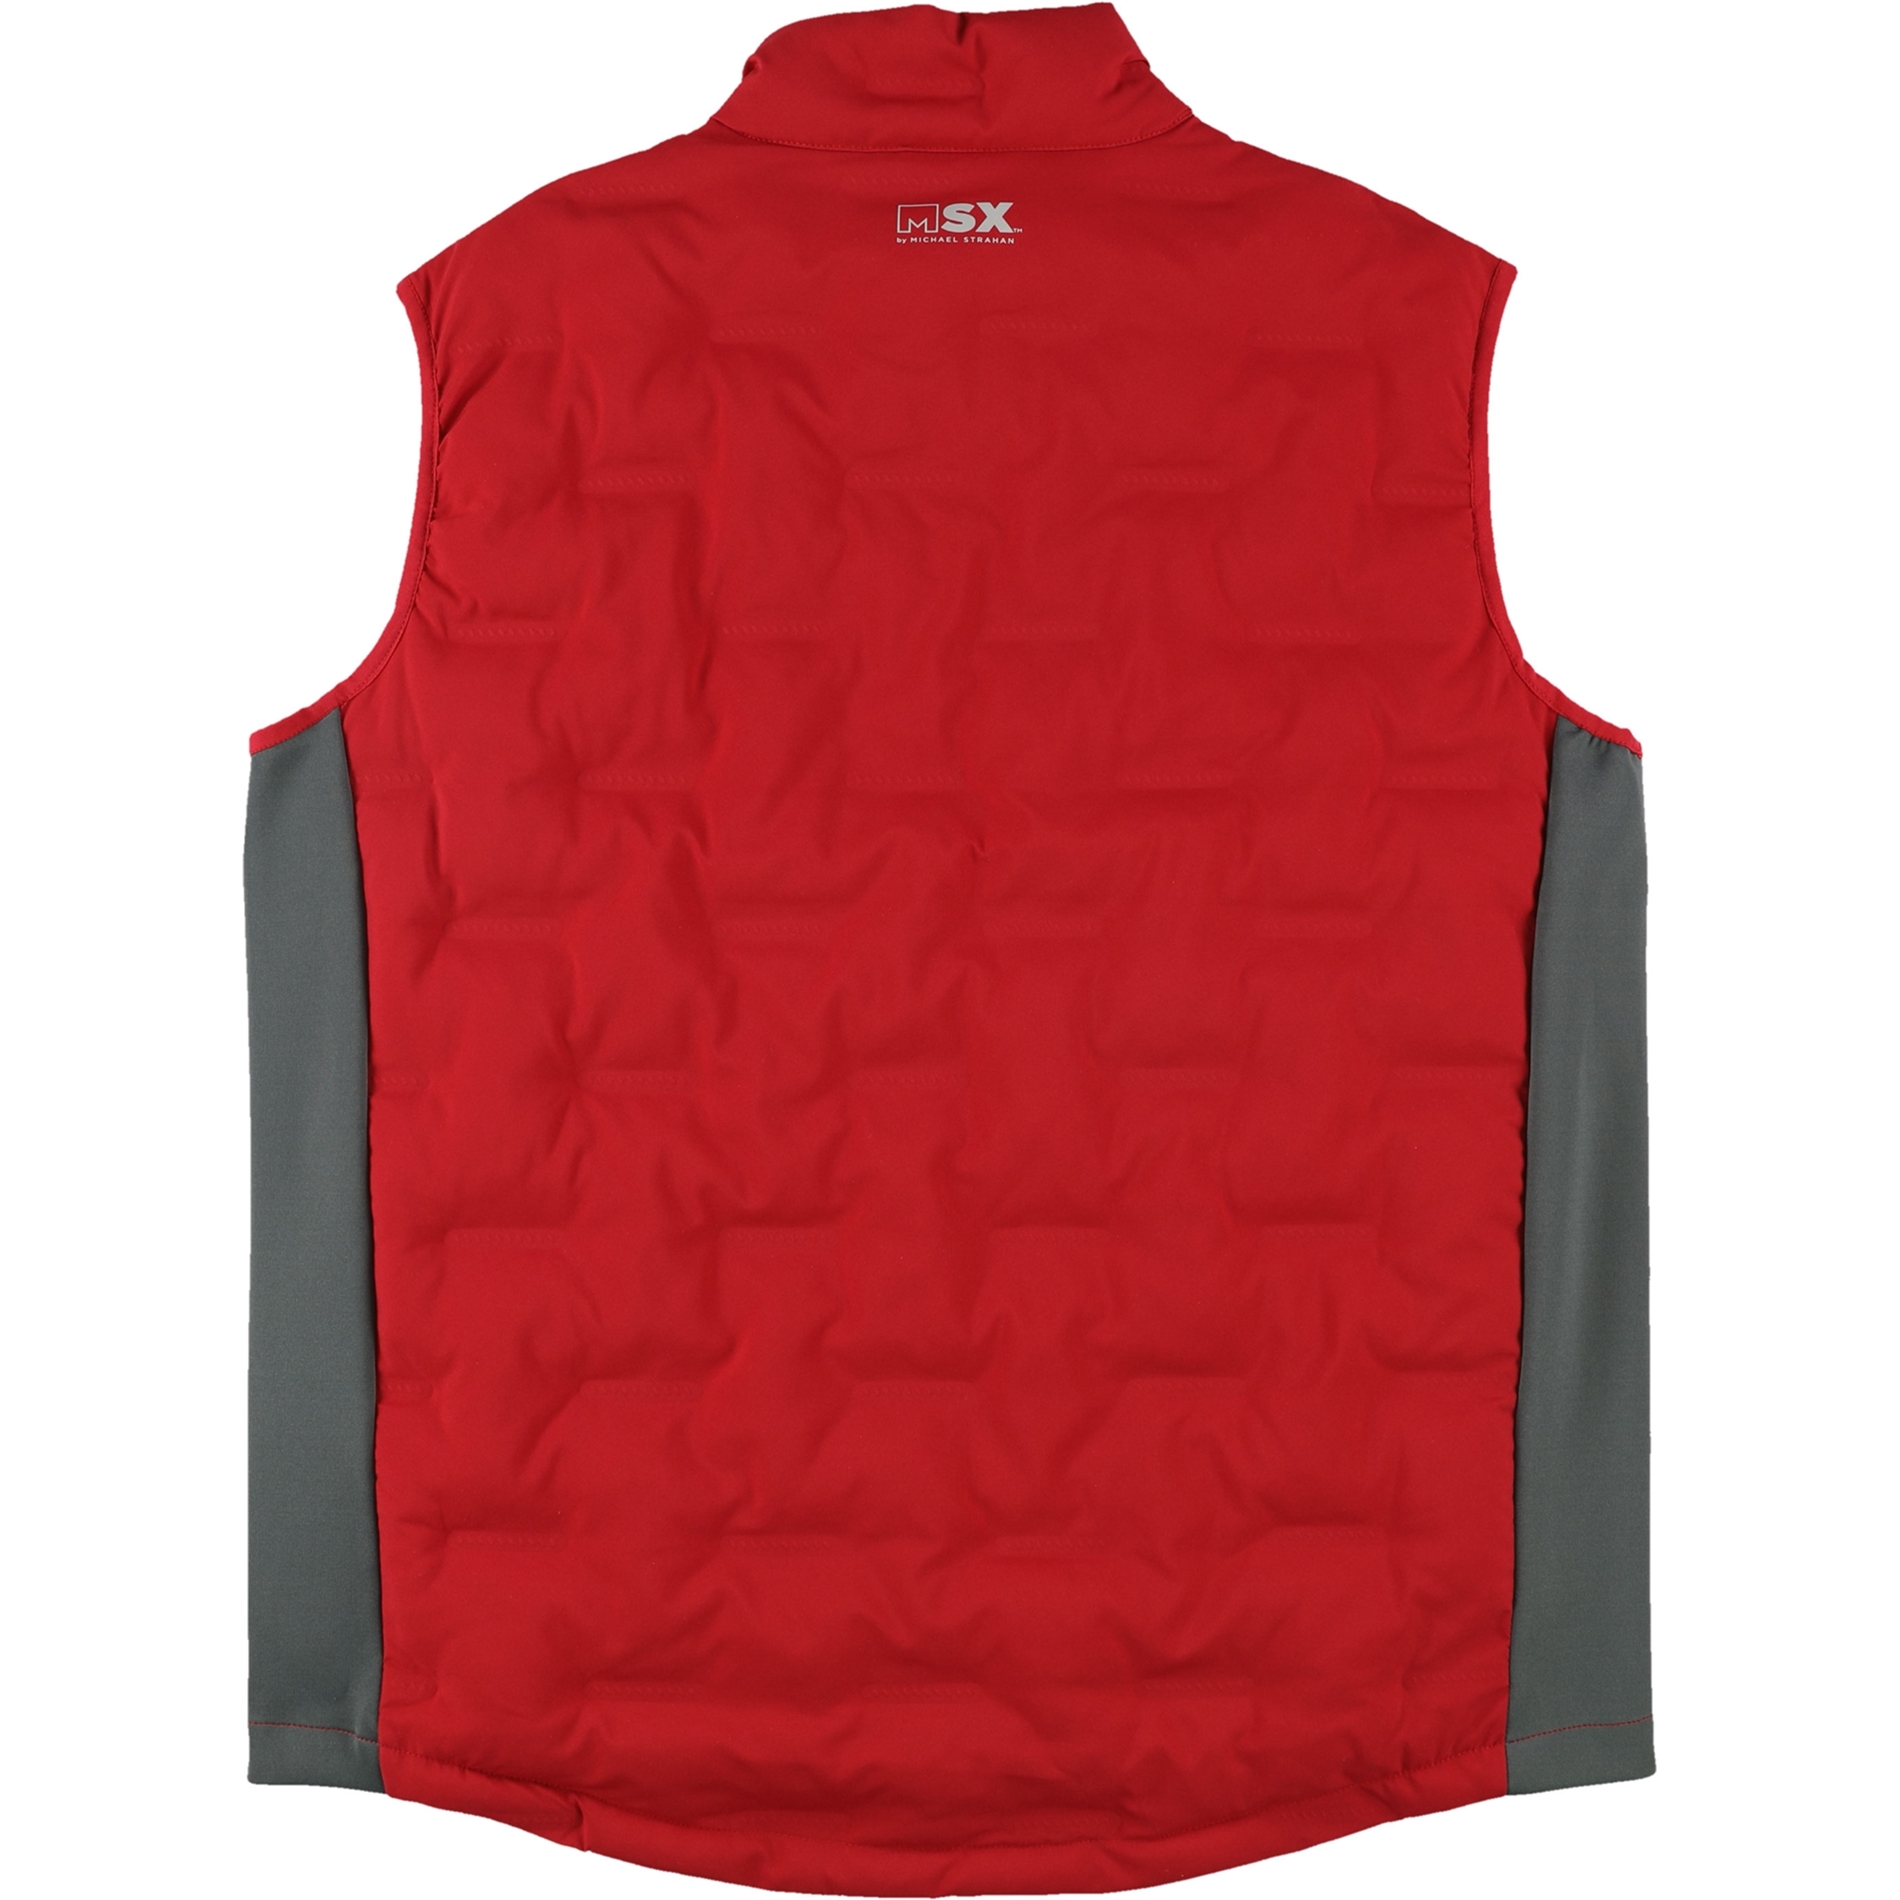 G-Iii Sports Mens San Francisco 49Ers Outerwear Vest